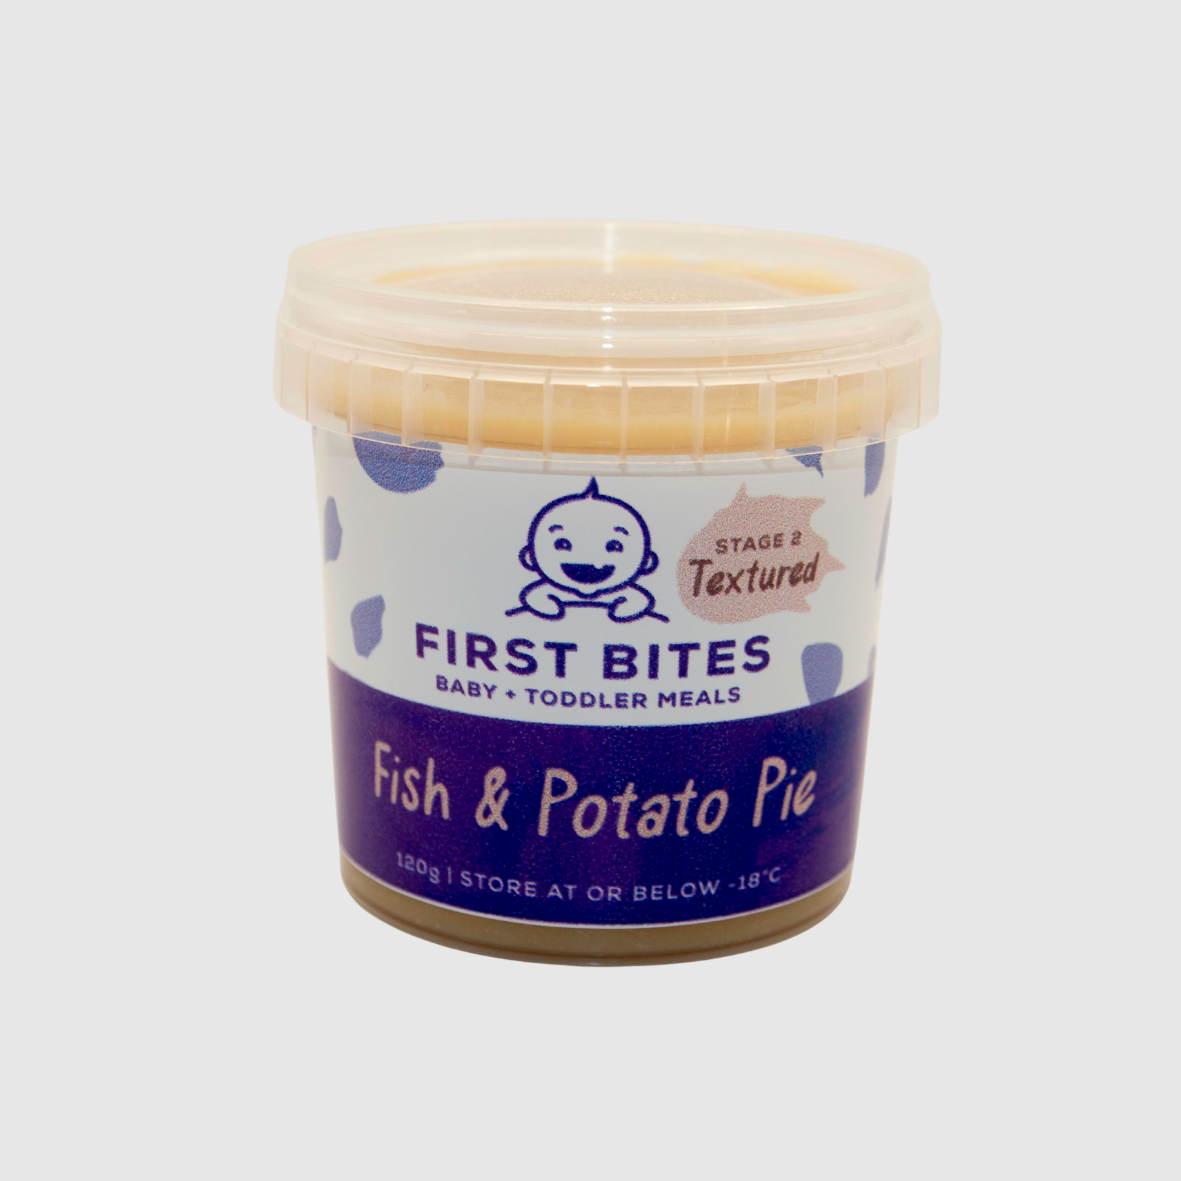 First Bites Baby Food - Fish & Potato Pie